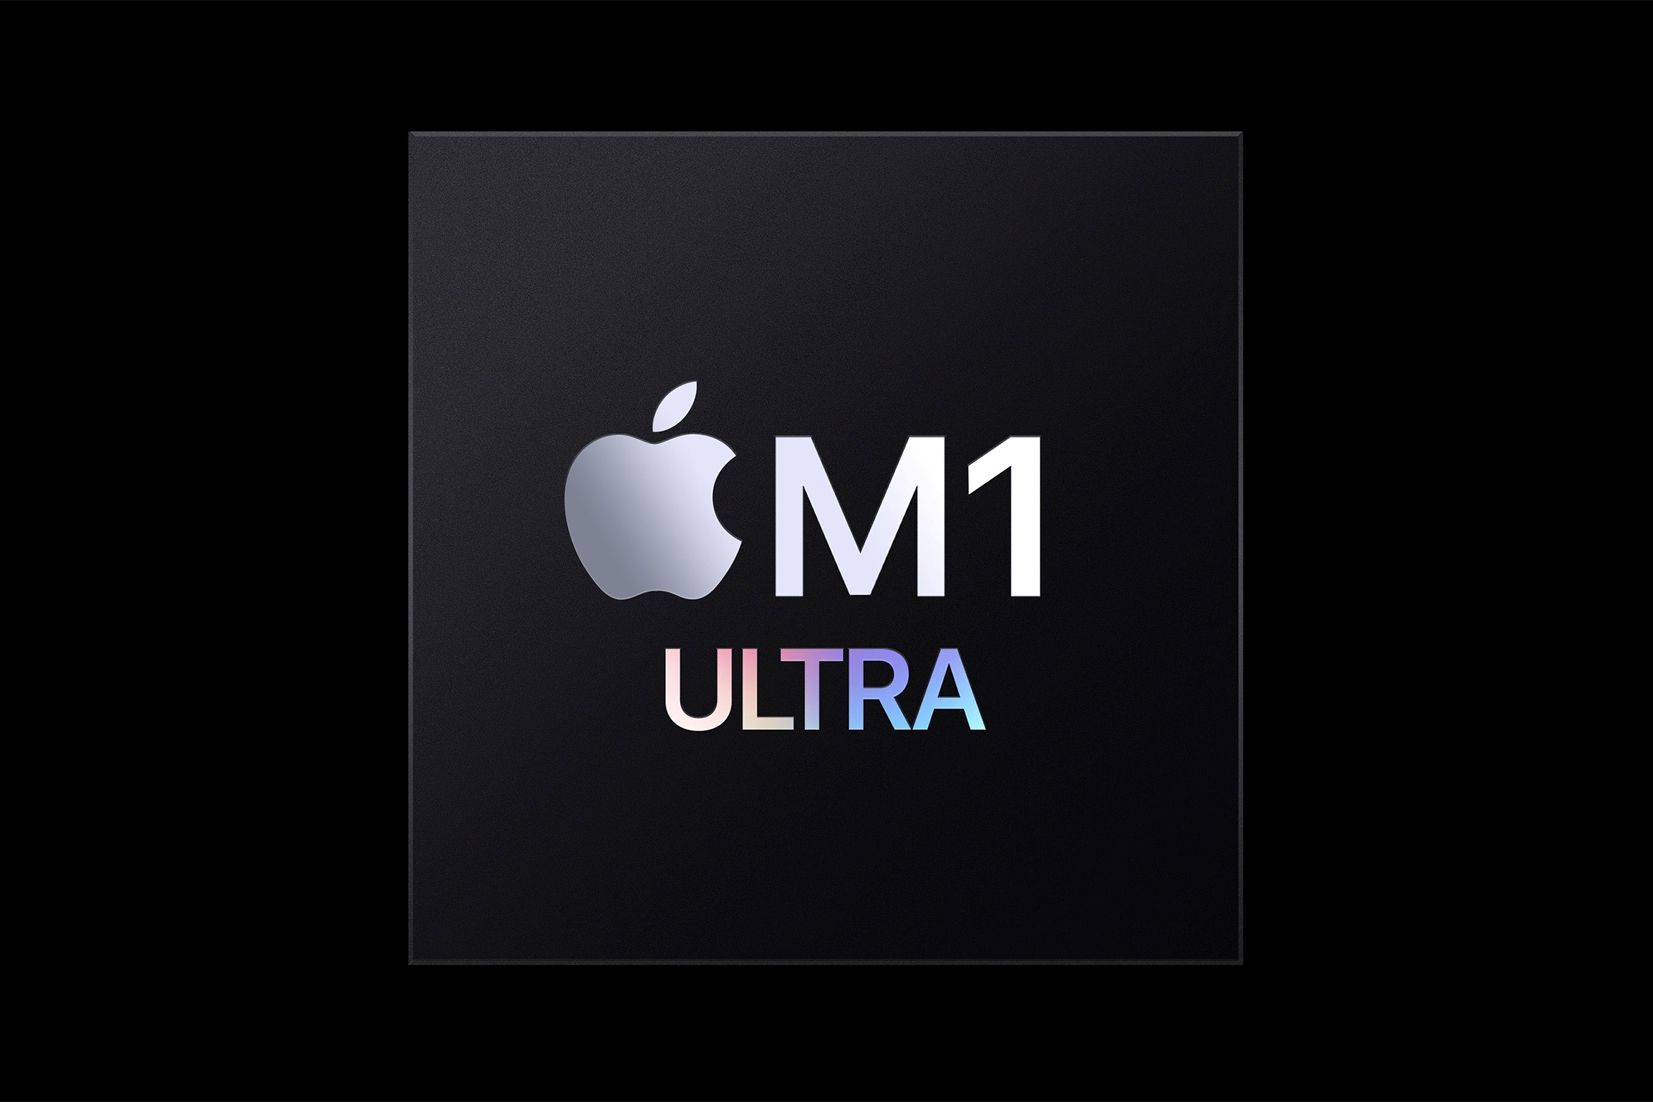 Apple M1 Ultra Chip